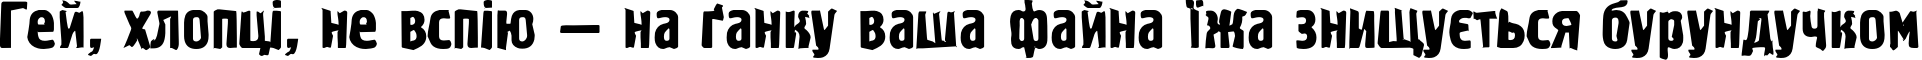 Пример написания шрифтом Graffiti1C текста на украинском